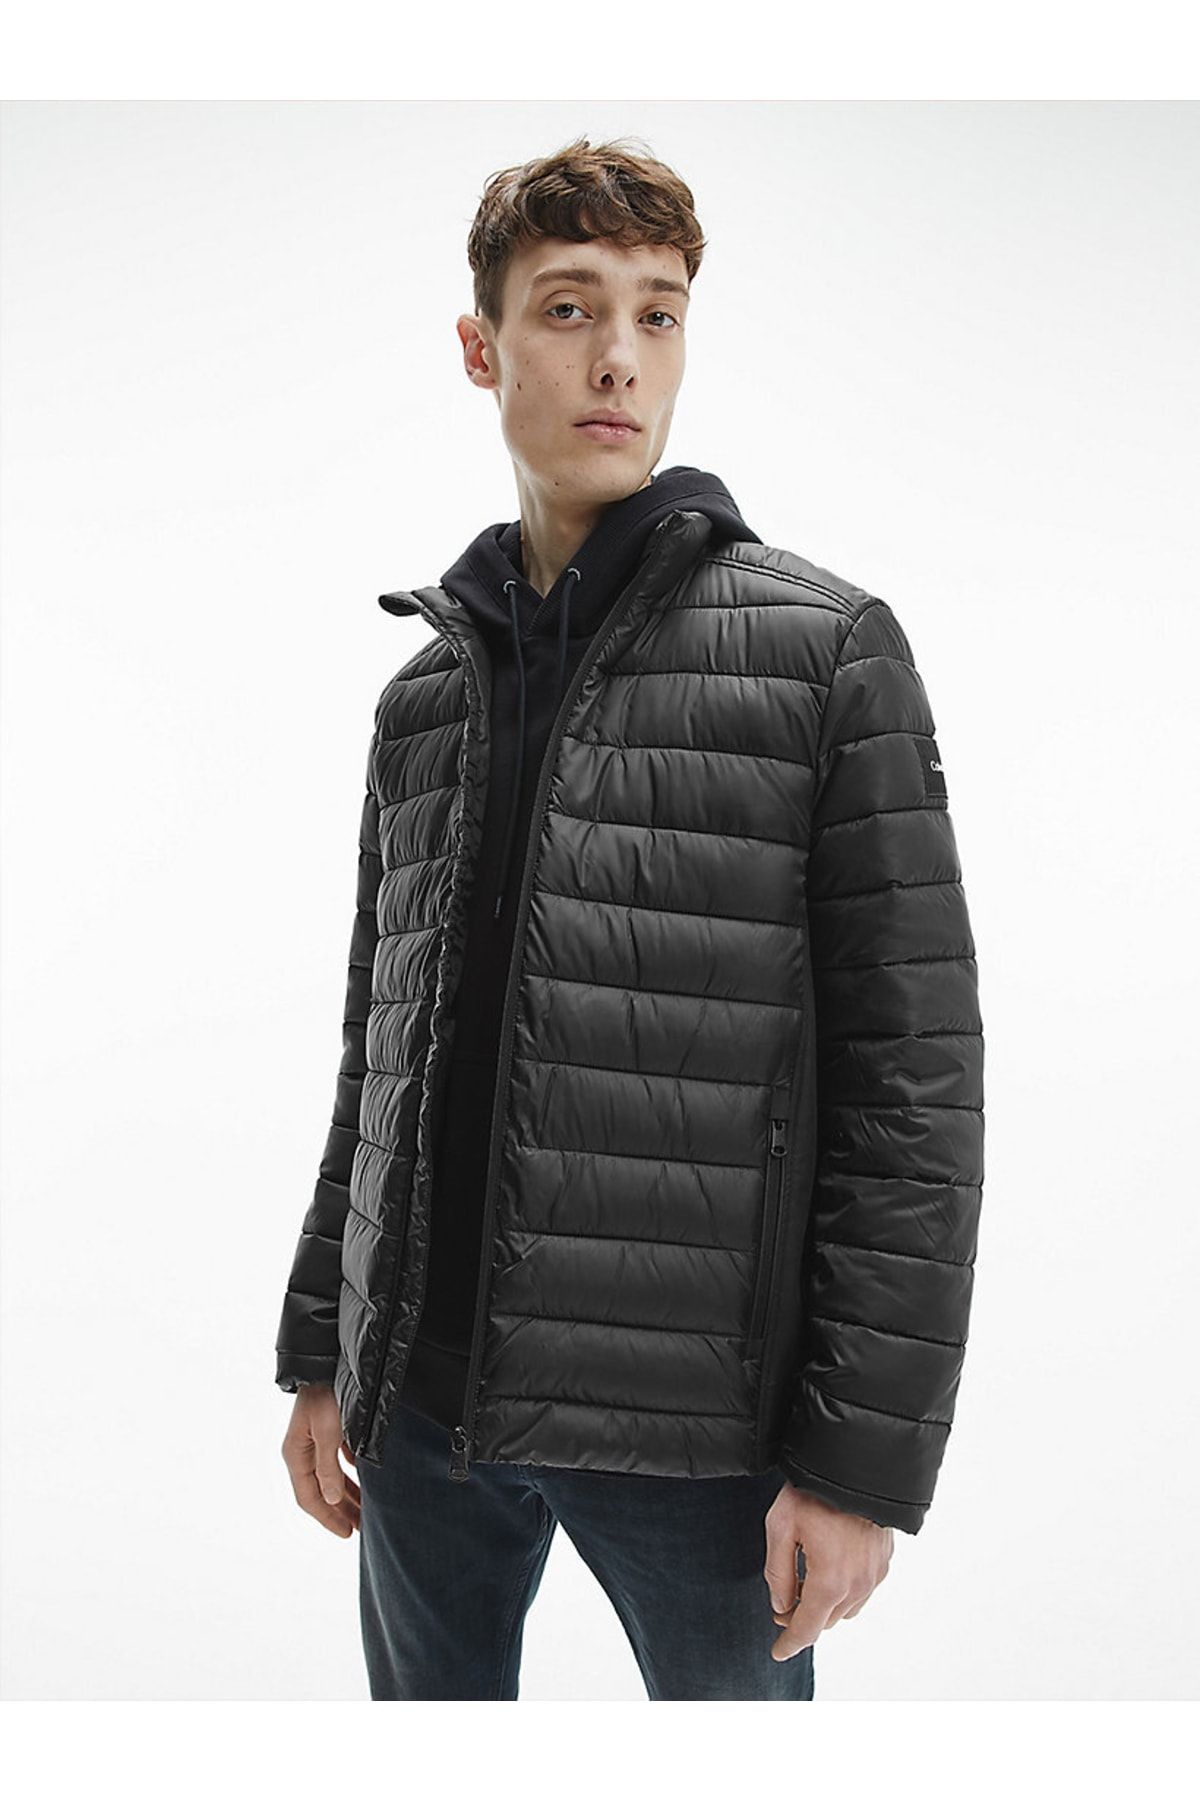 Calvin Klein Jacket - Black - Regular fit - Trendyol